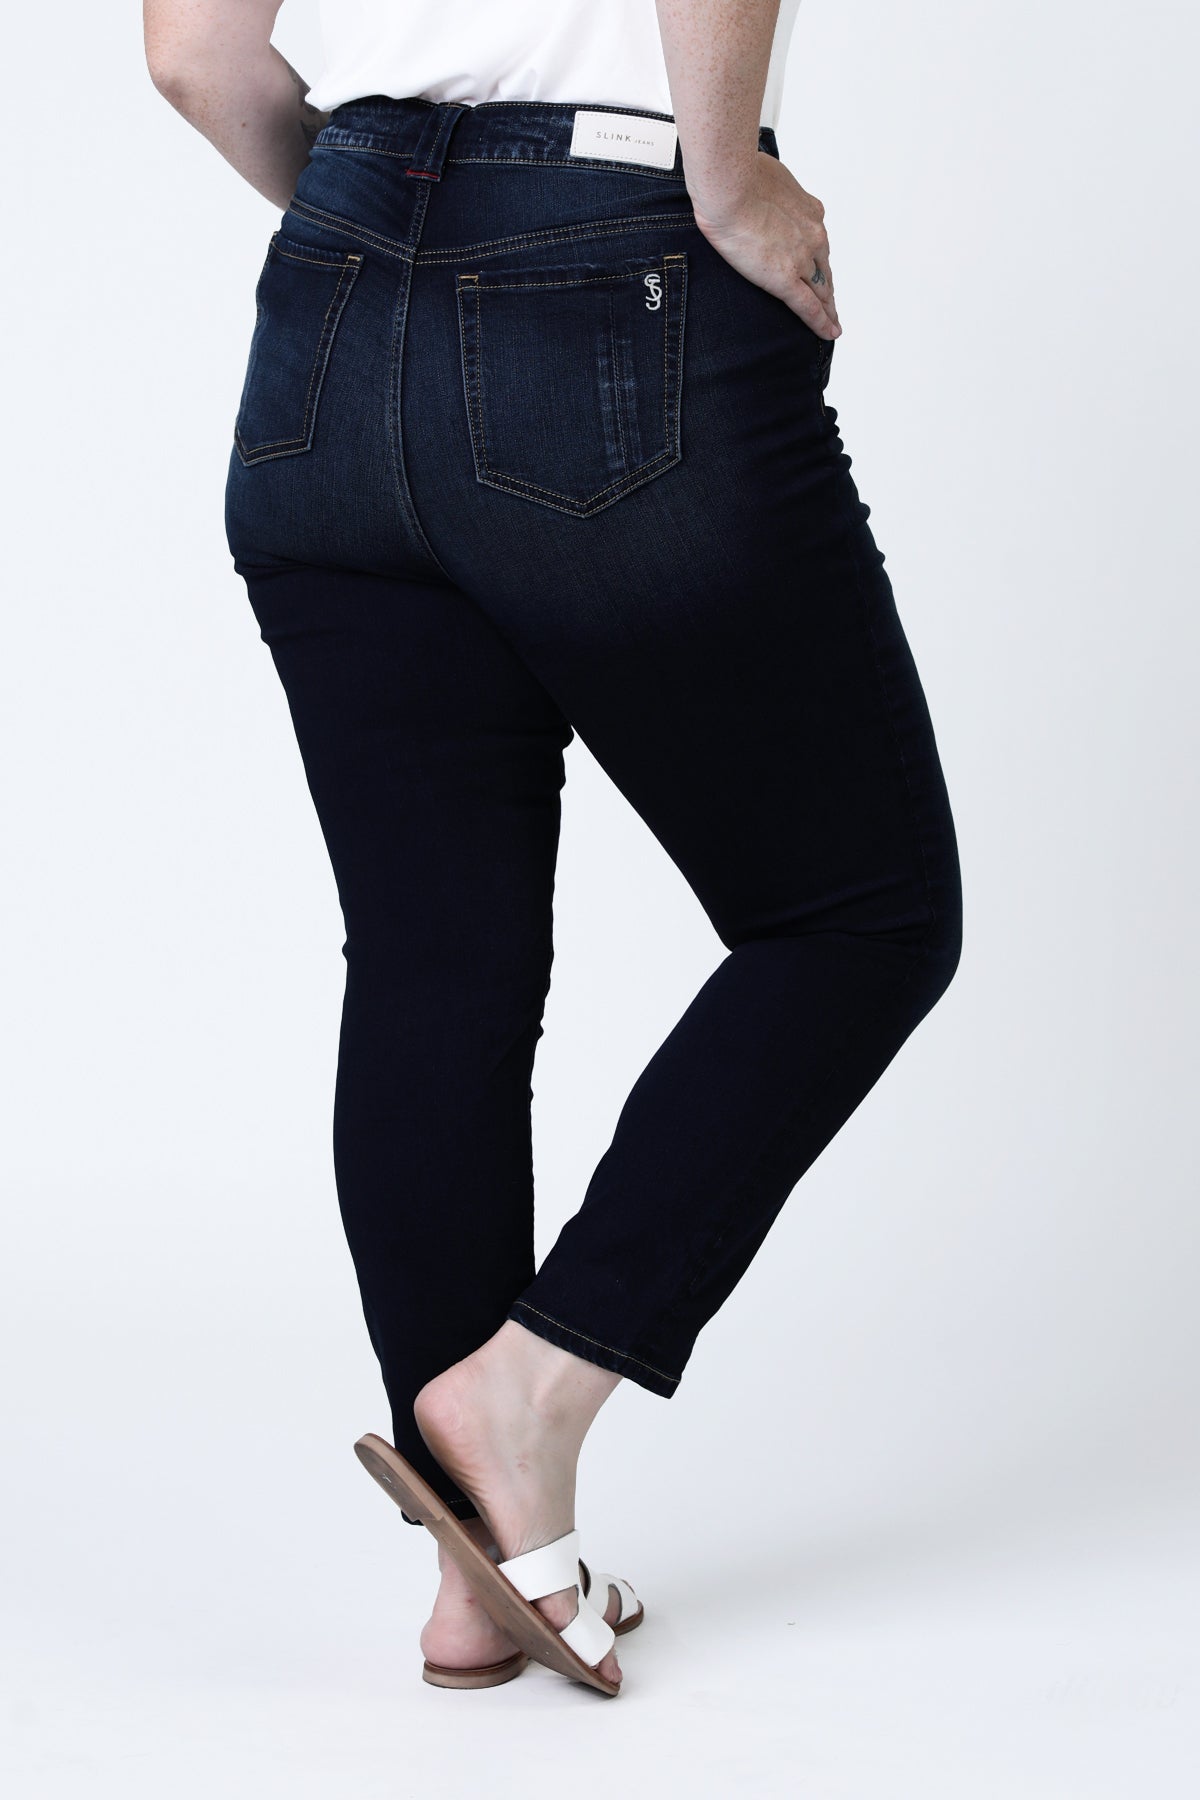 Lane Bryant Women's Plus Size 28 Black Skinny Jeans Genius Fit